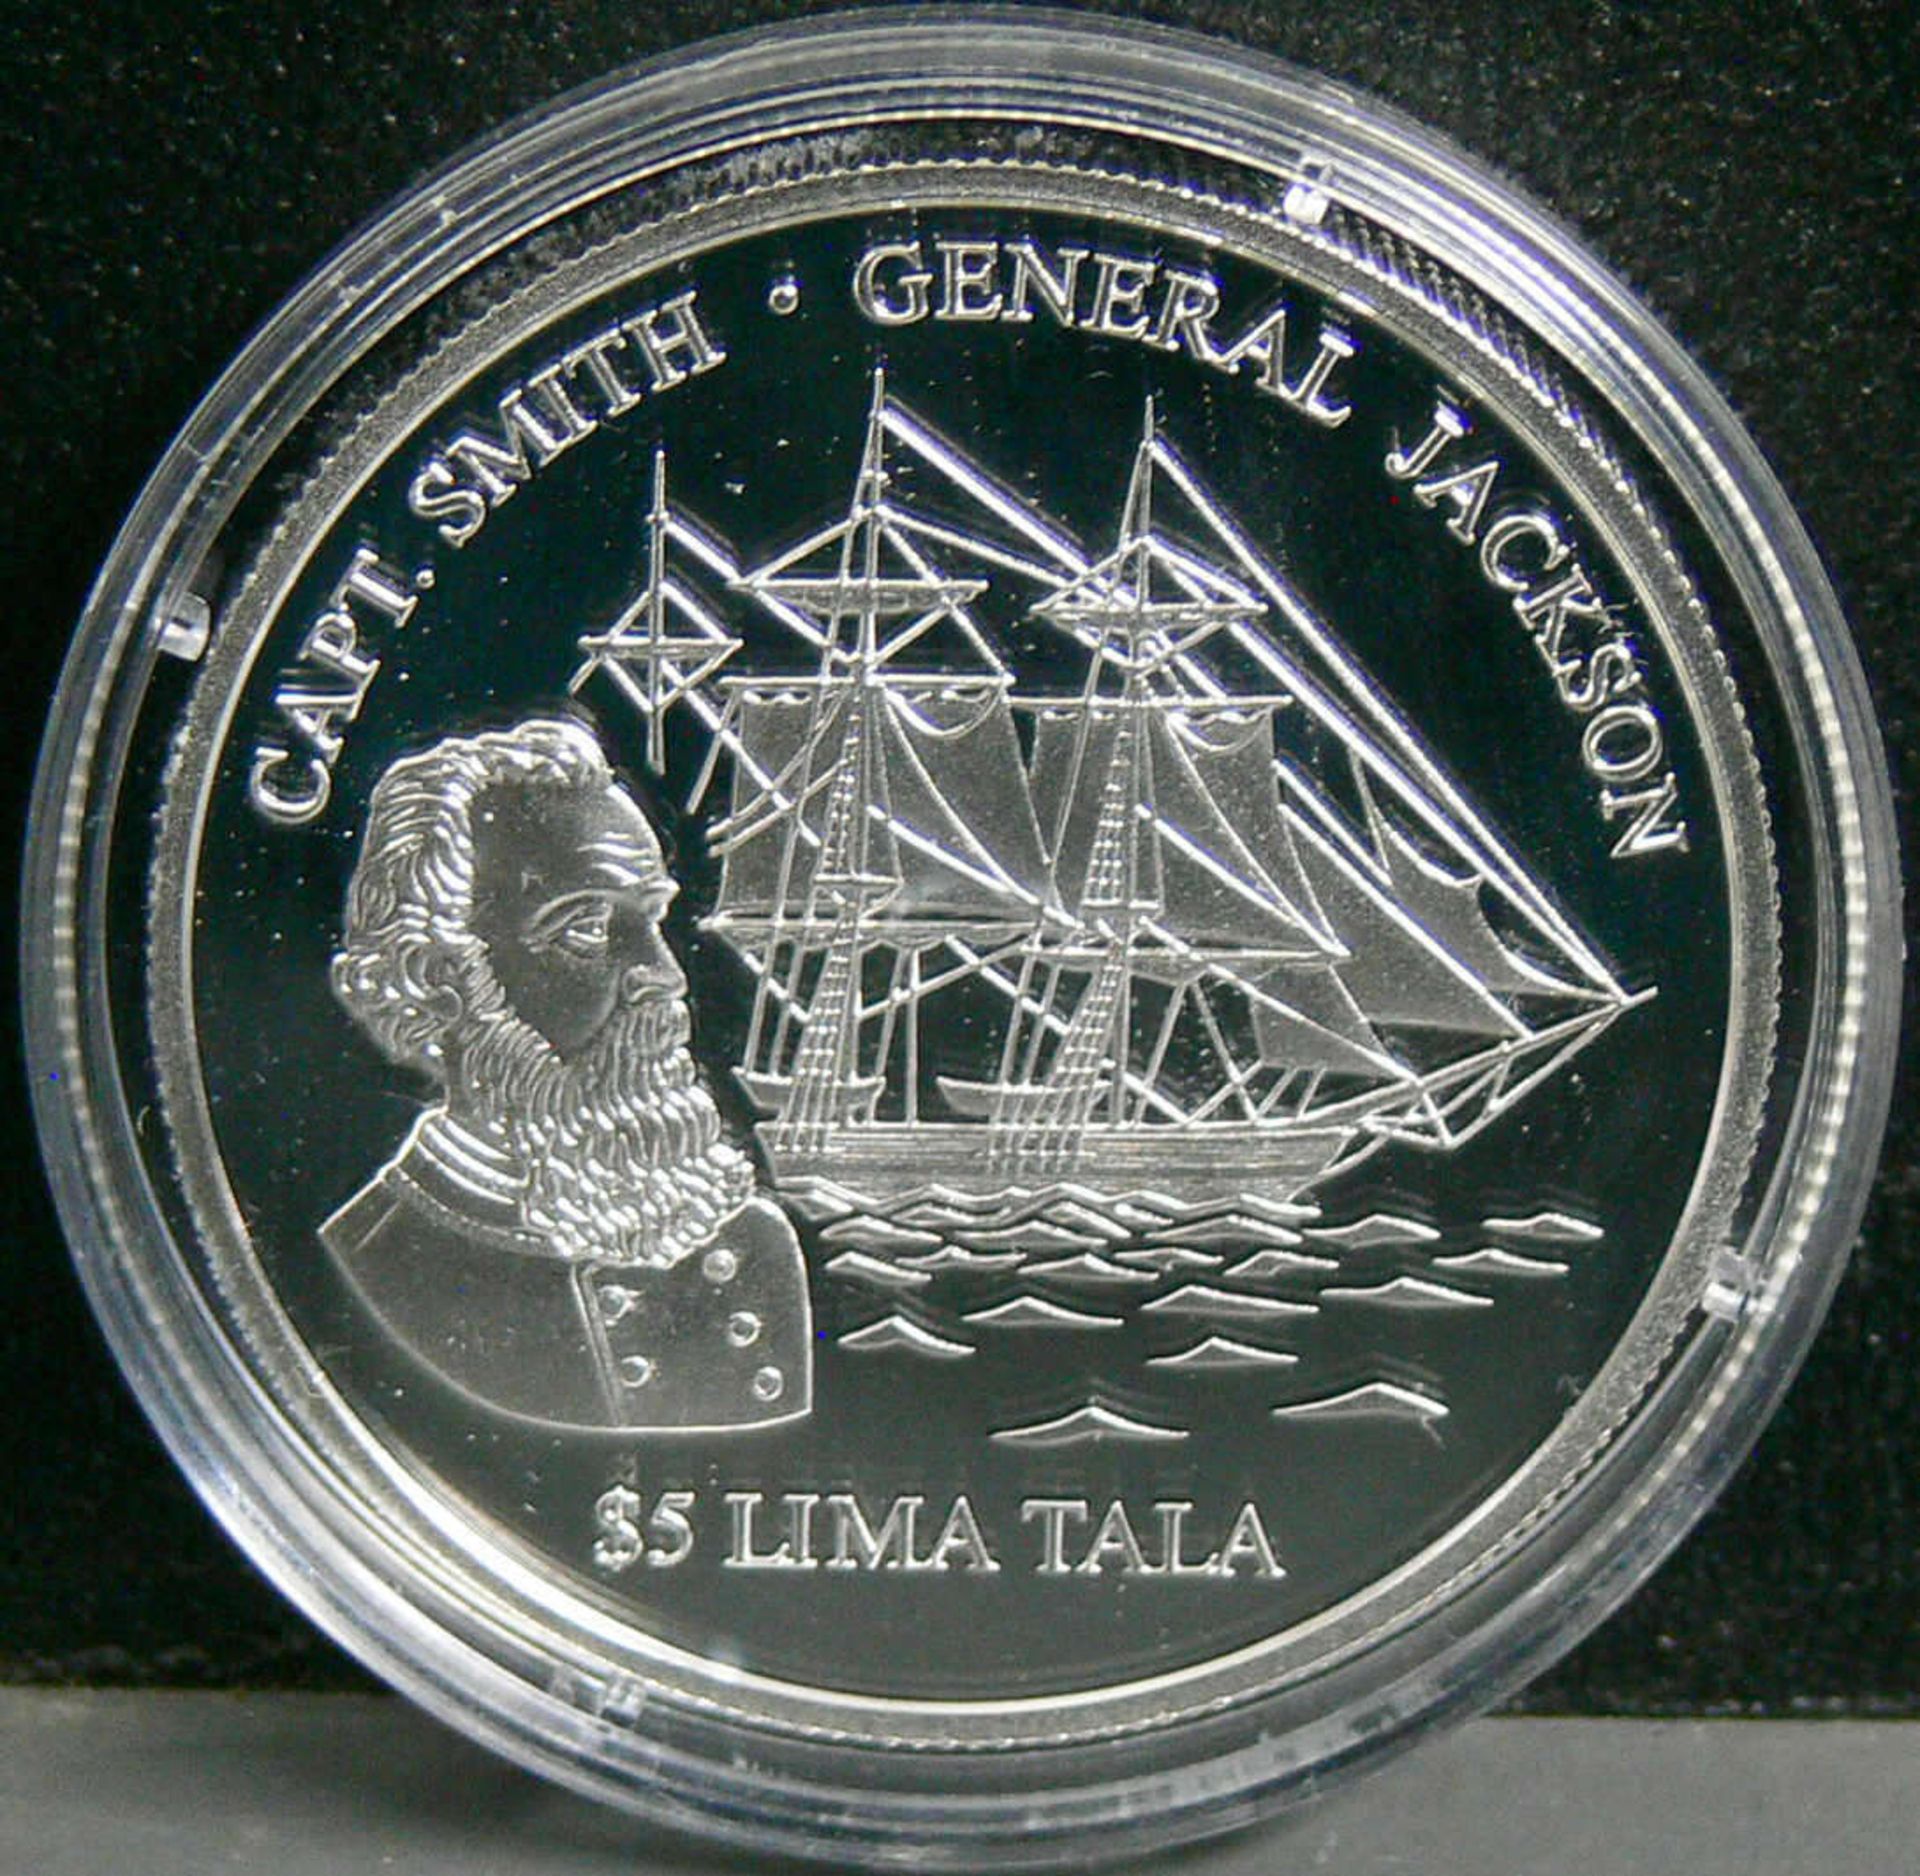 Tokelau 2003, 5 Tala - Silbermünze "Capt. Smith, General Jackson". Silber 999, Gewicht: 28,3 g,